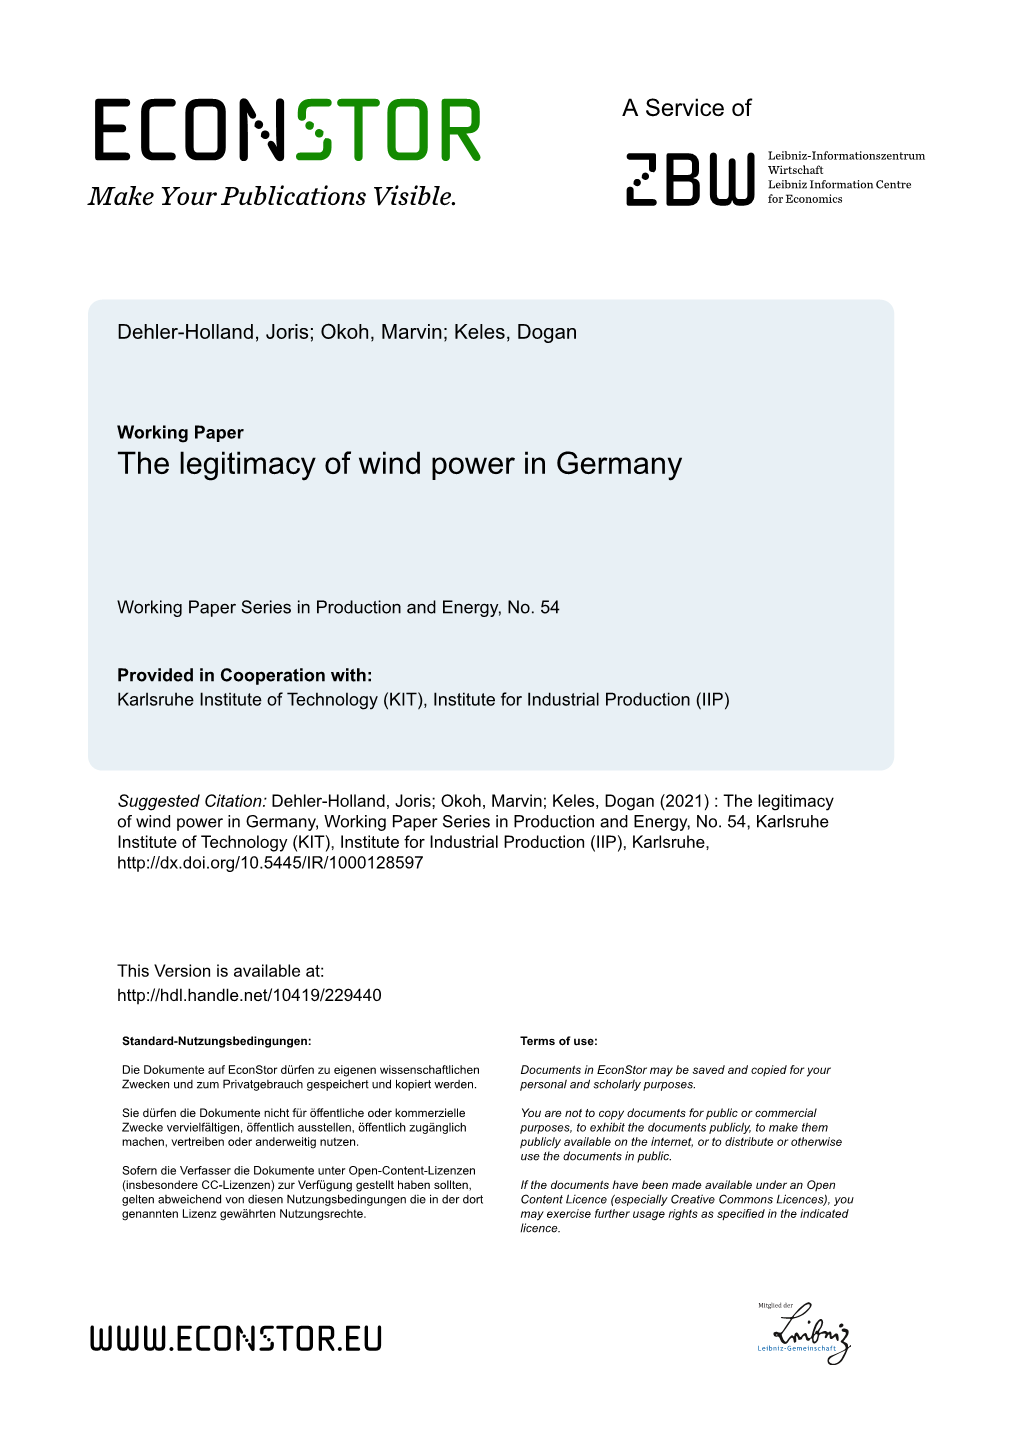 The Legitimacy of Wind Power in Germany